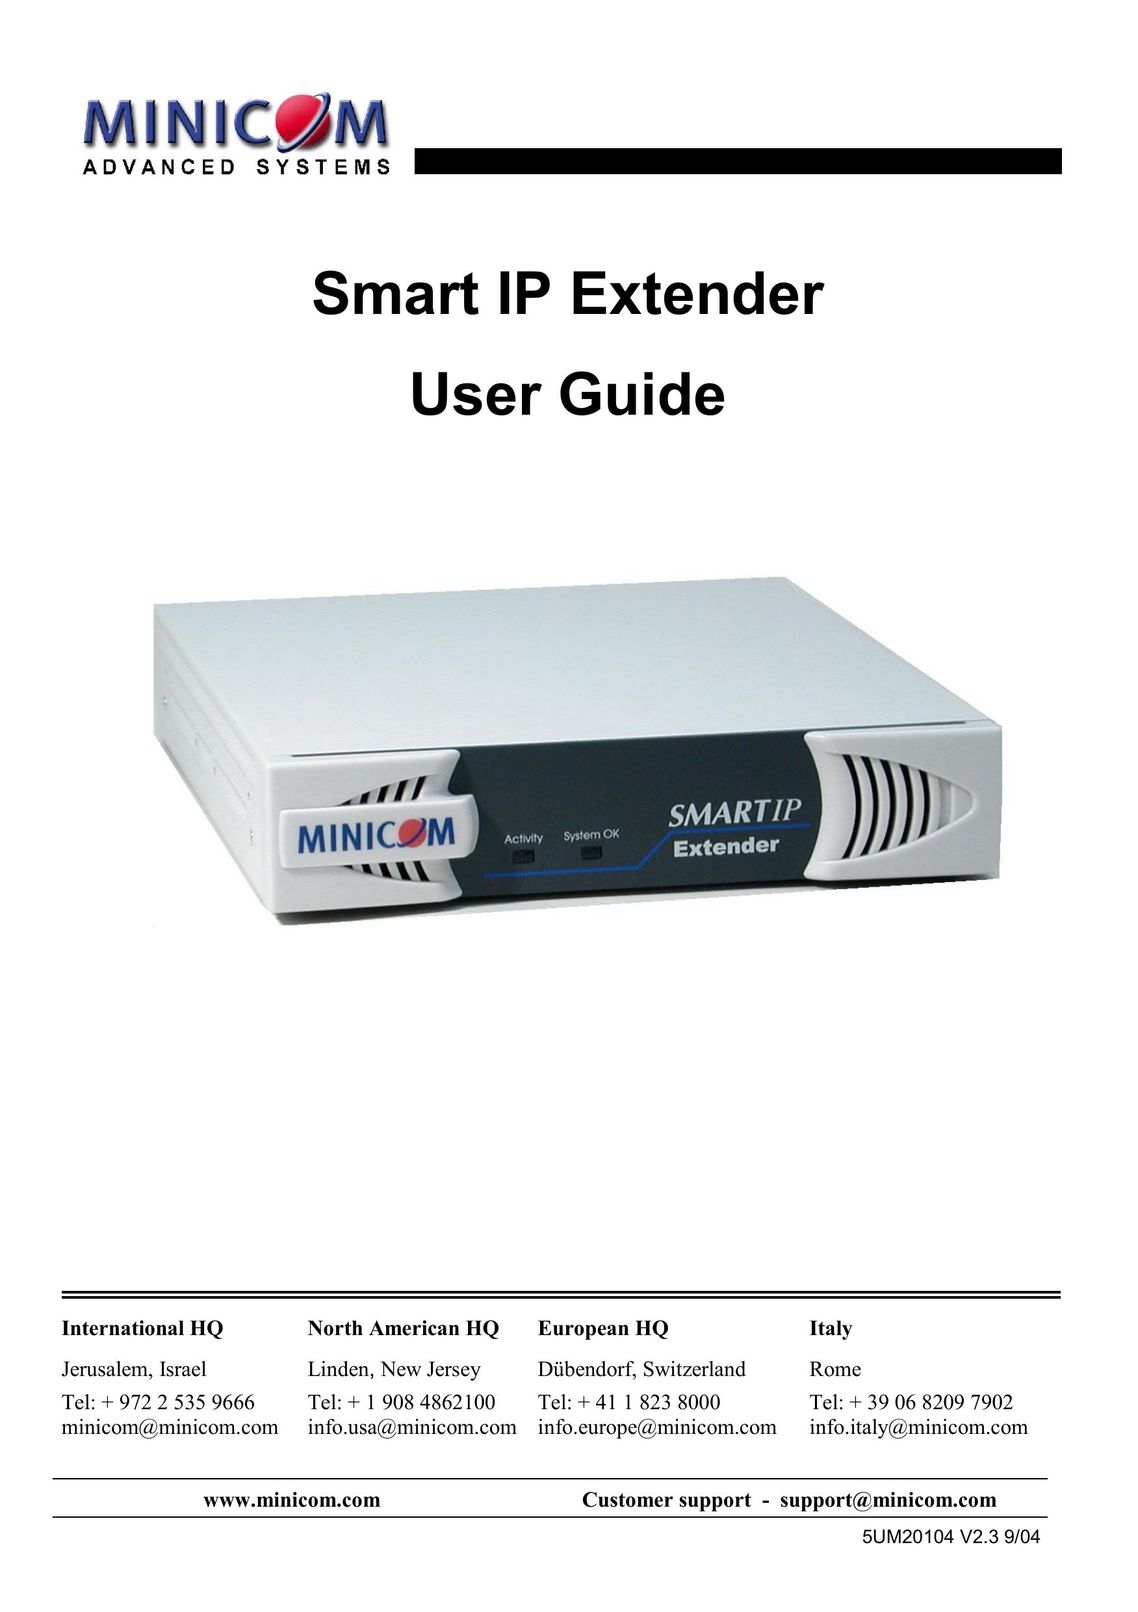 Minicom Advanced Systems Smart IP Extender Network Card User Manual